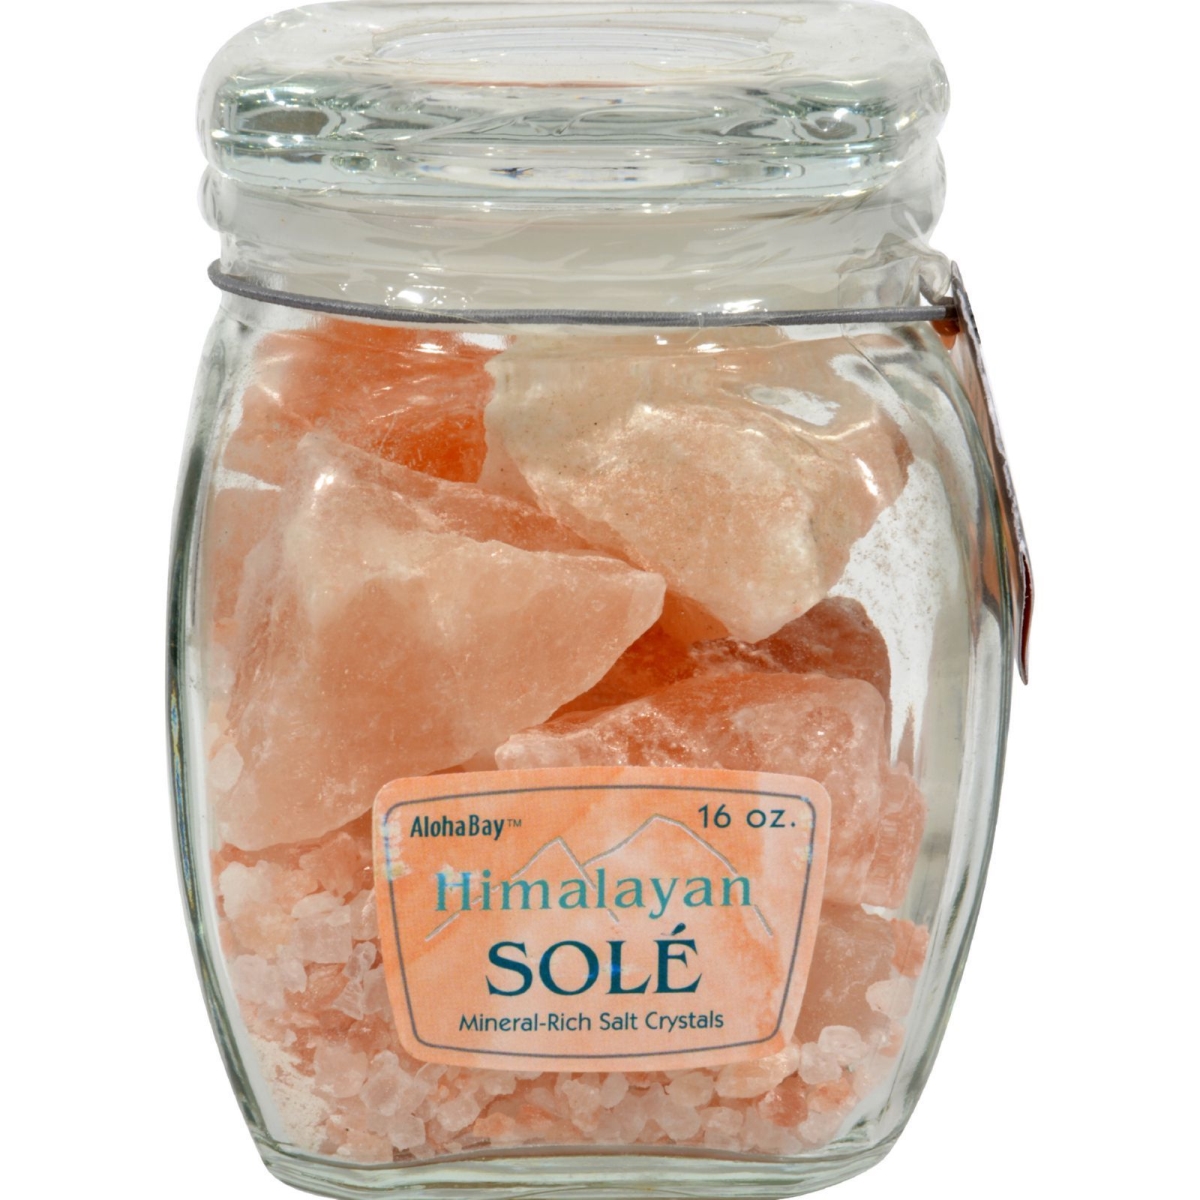 Hg1248269 16 Oz Sole Salt Chunks In Jar